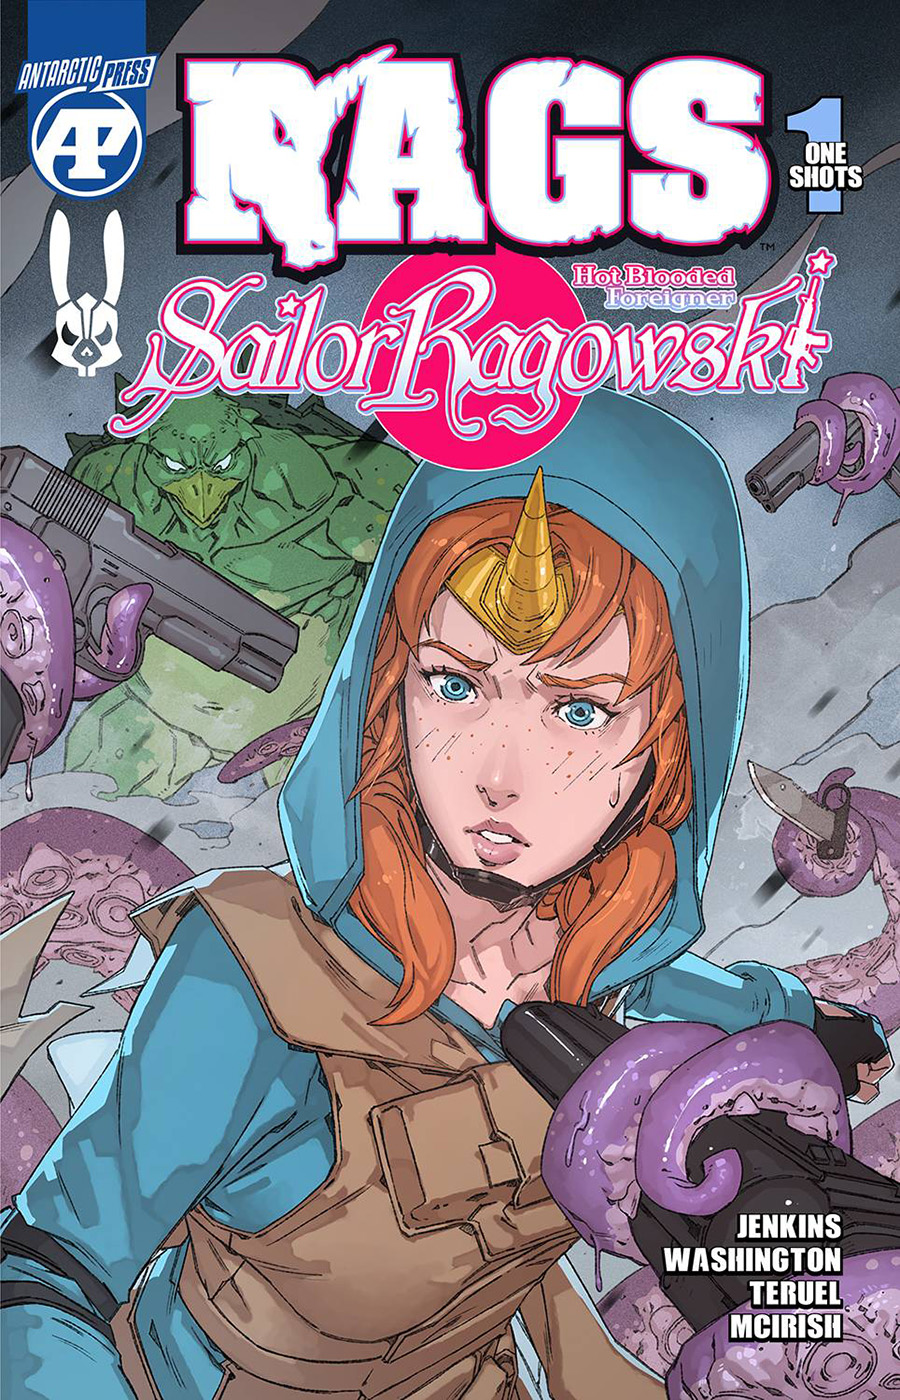 Rags Sailor Ragowski #1 (One Shot) Cover A Regular Luigi Teruel Cover